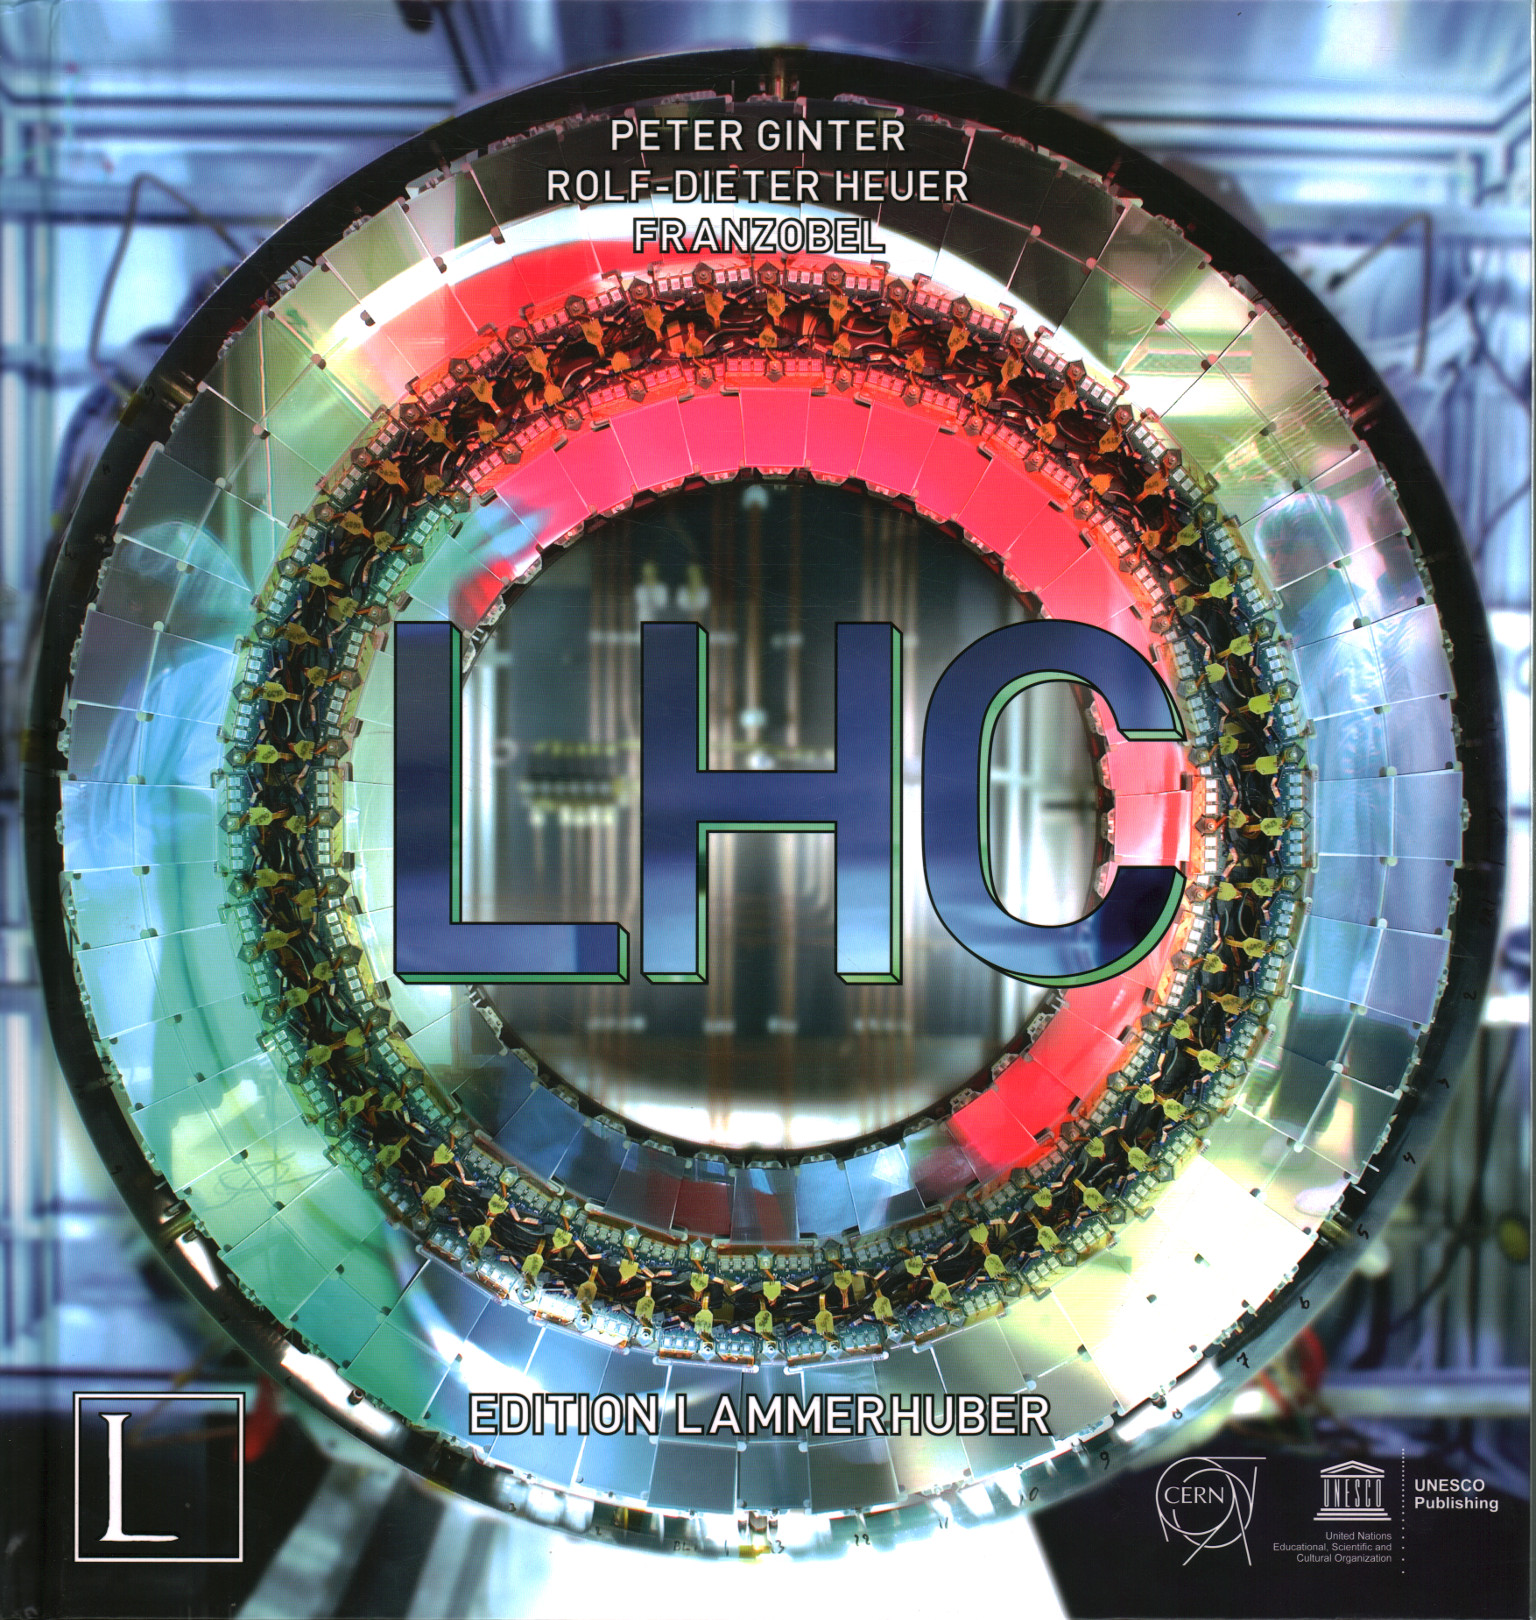 LHC Large Hadron Collider, Peter Ginter Rolf-Dieter Heuer Franzobel